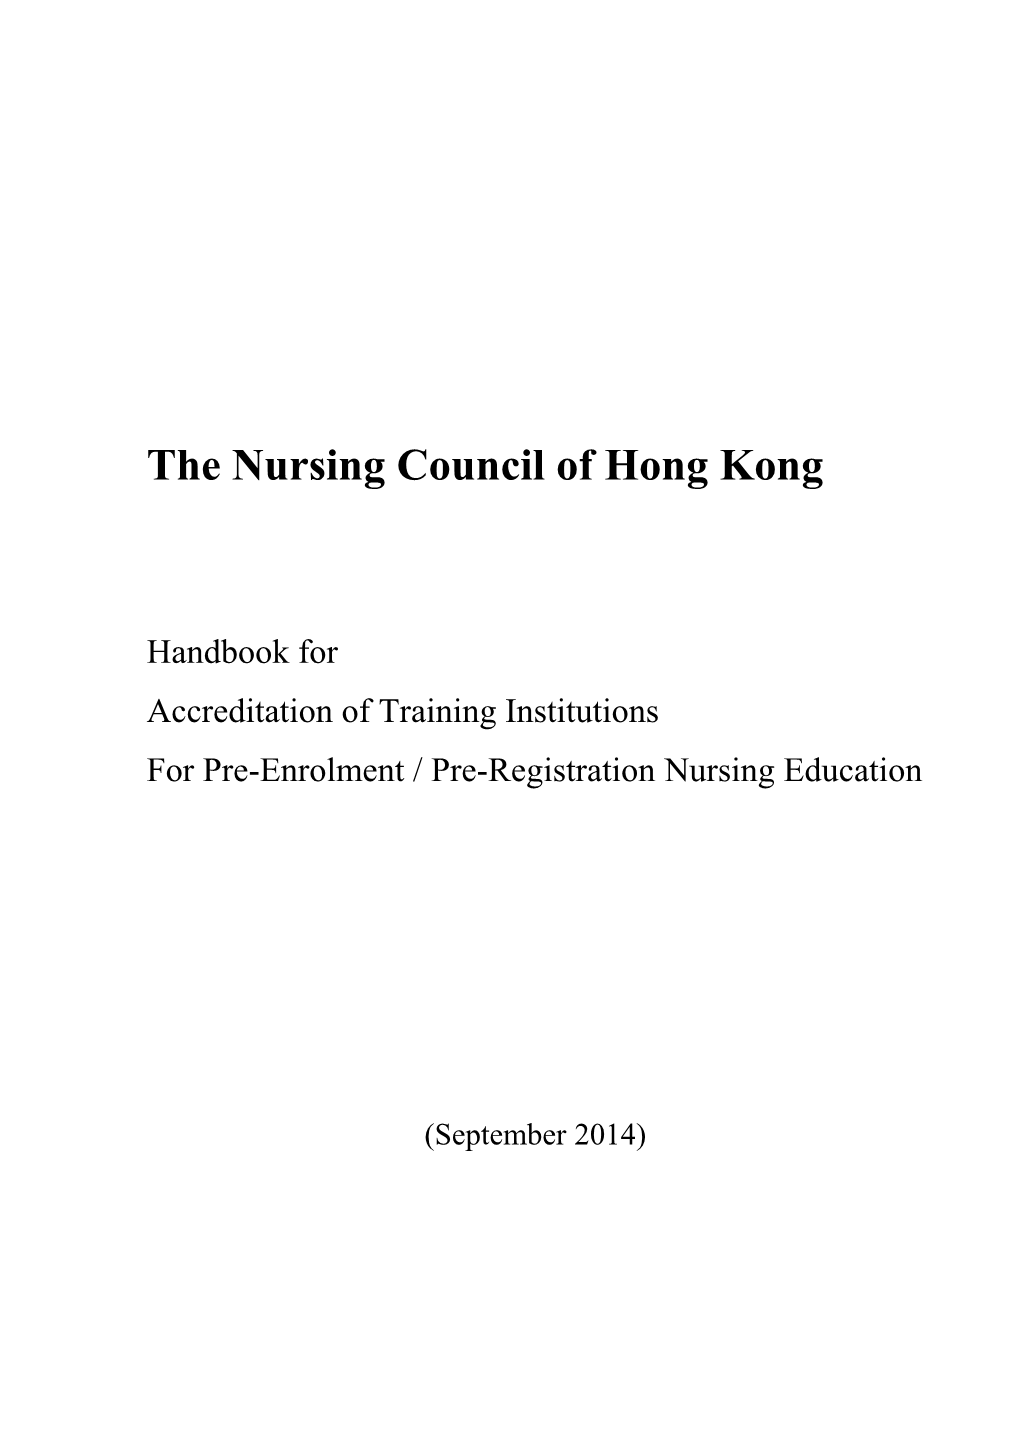 The Nursing Council of Hong Kong s1